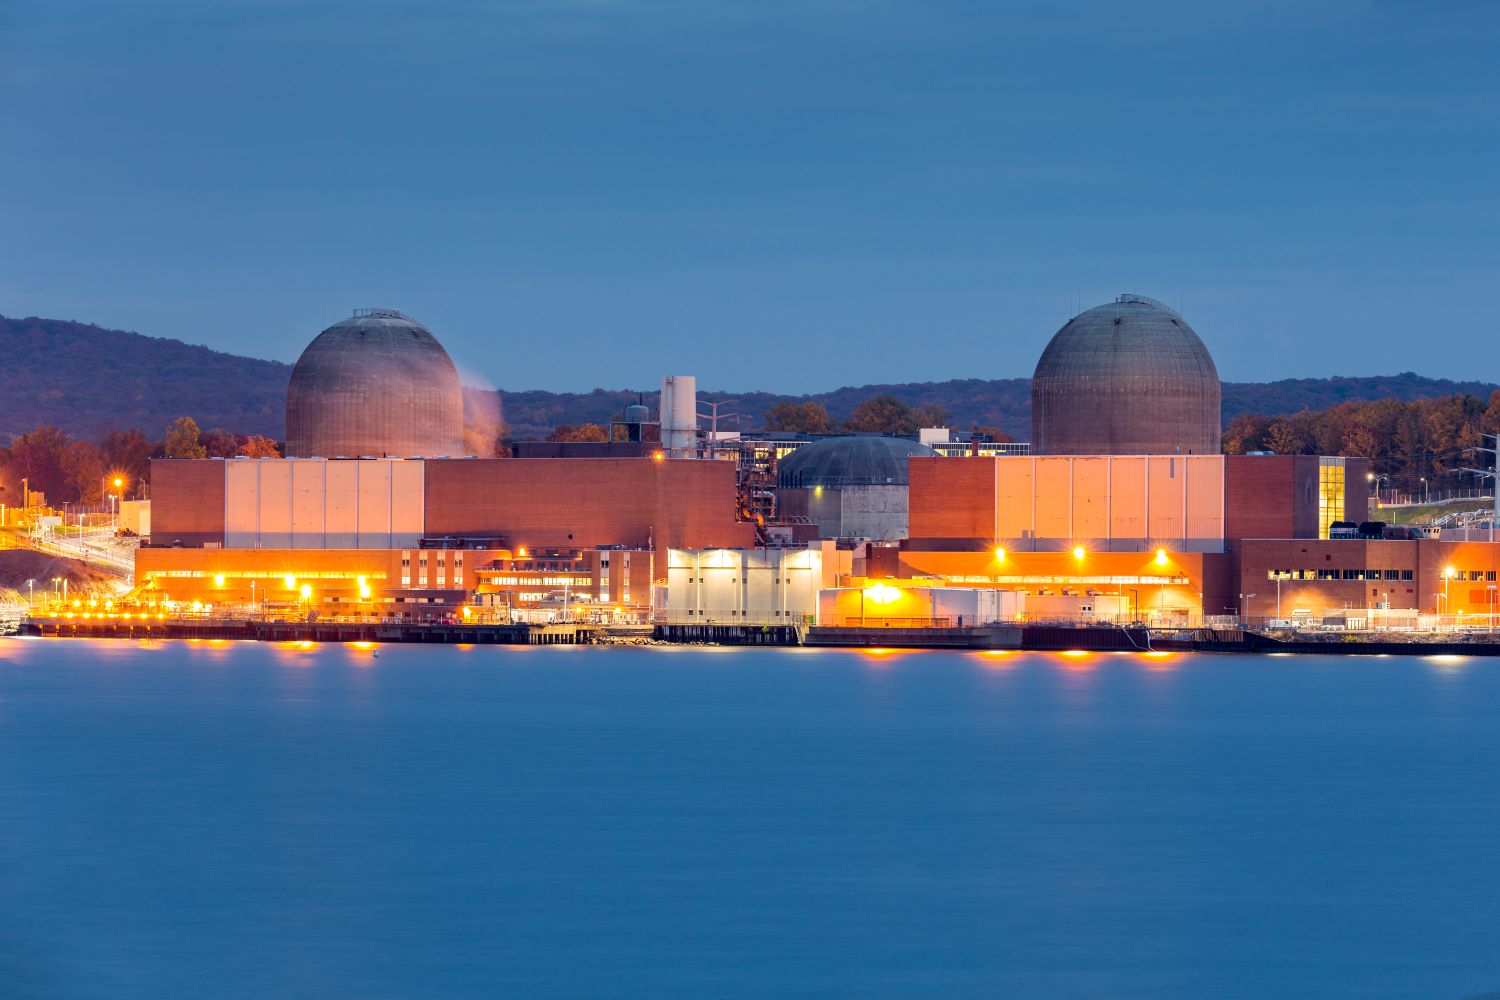 Liberar el poder de los datos para impulsar la industria nuclear